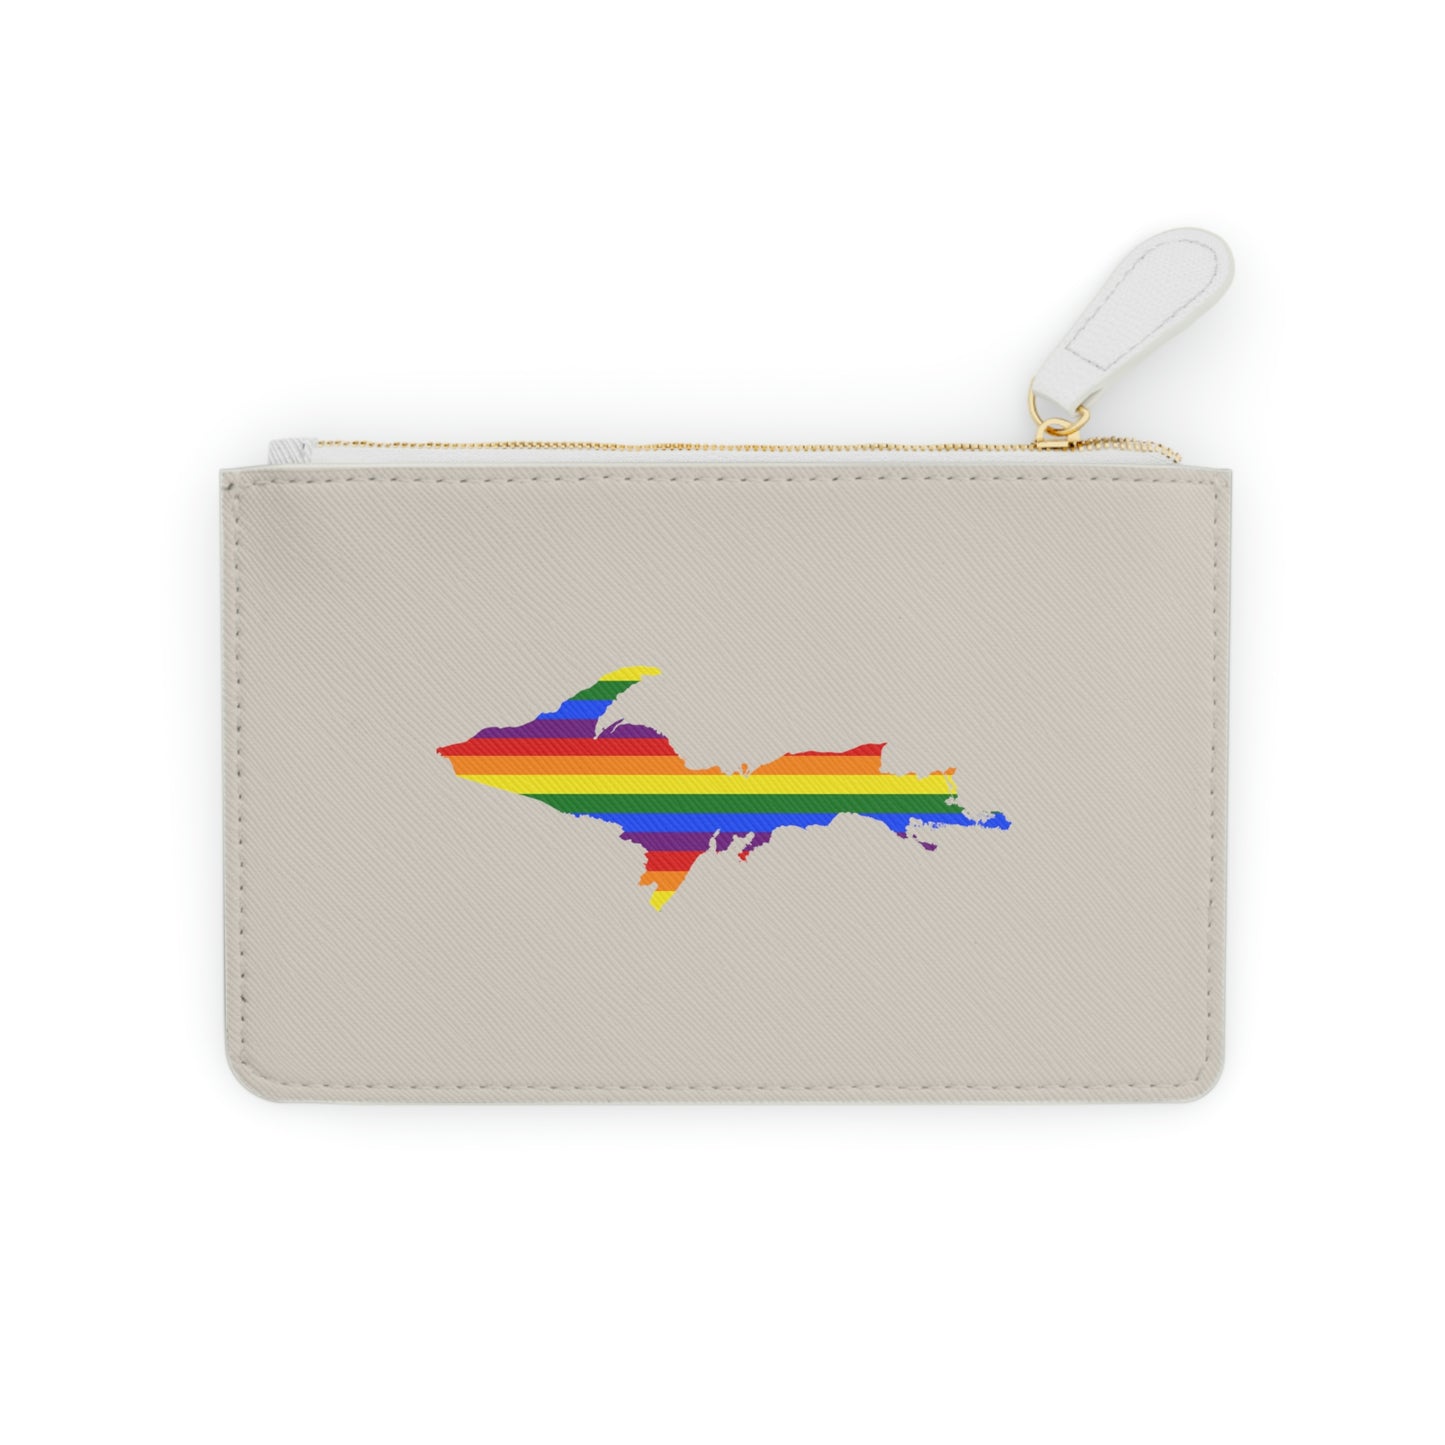 Michigan Upper Peninsula Mini Clutch Bag (Canvas Color w/ UP Pride Flag Outline)